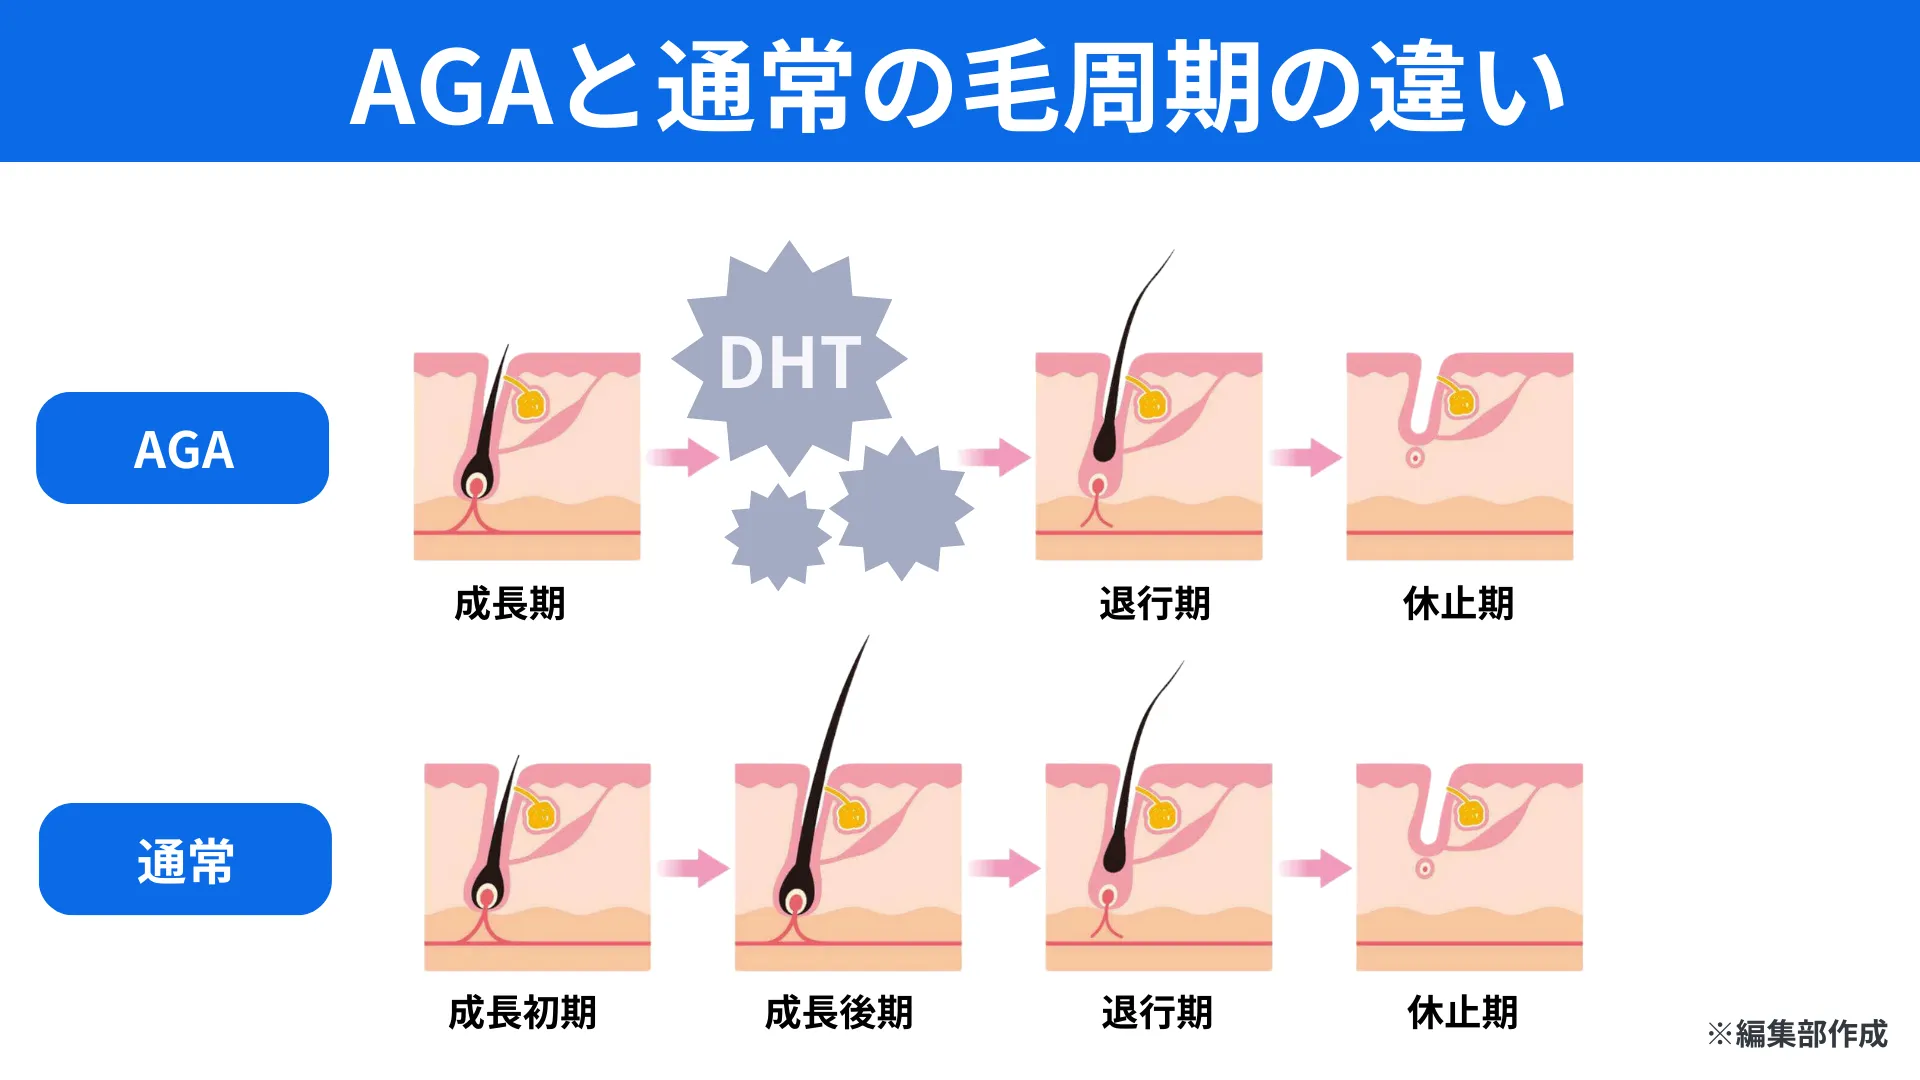 AGAと通常の毛周期の違い